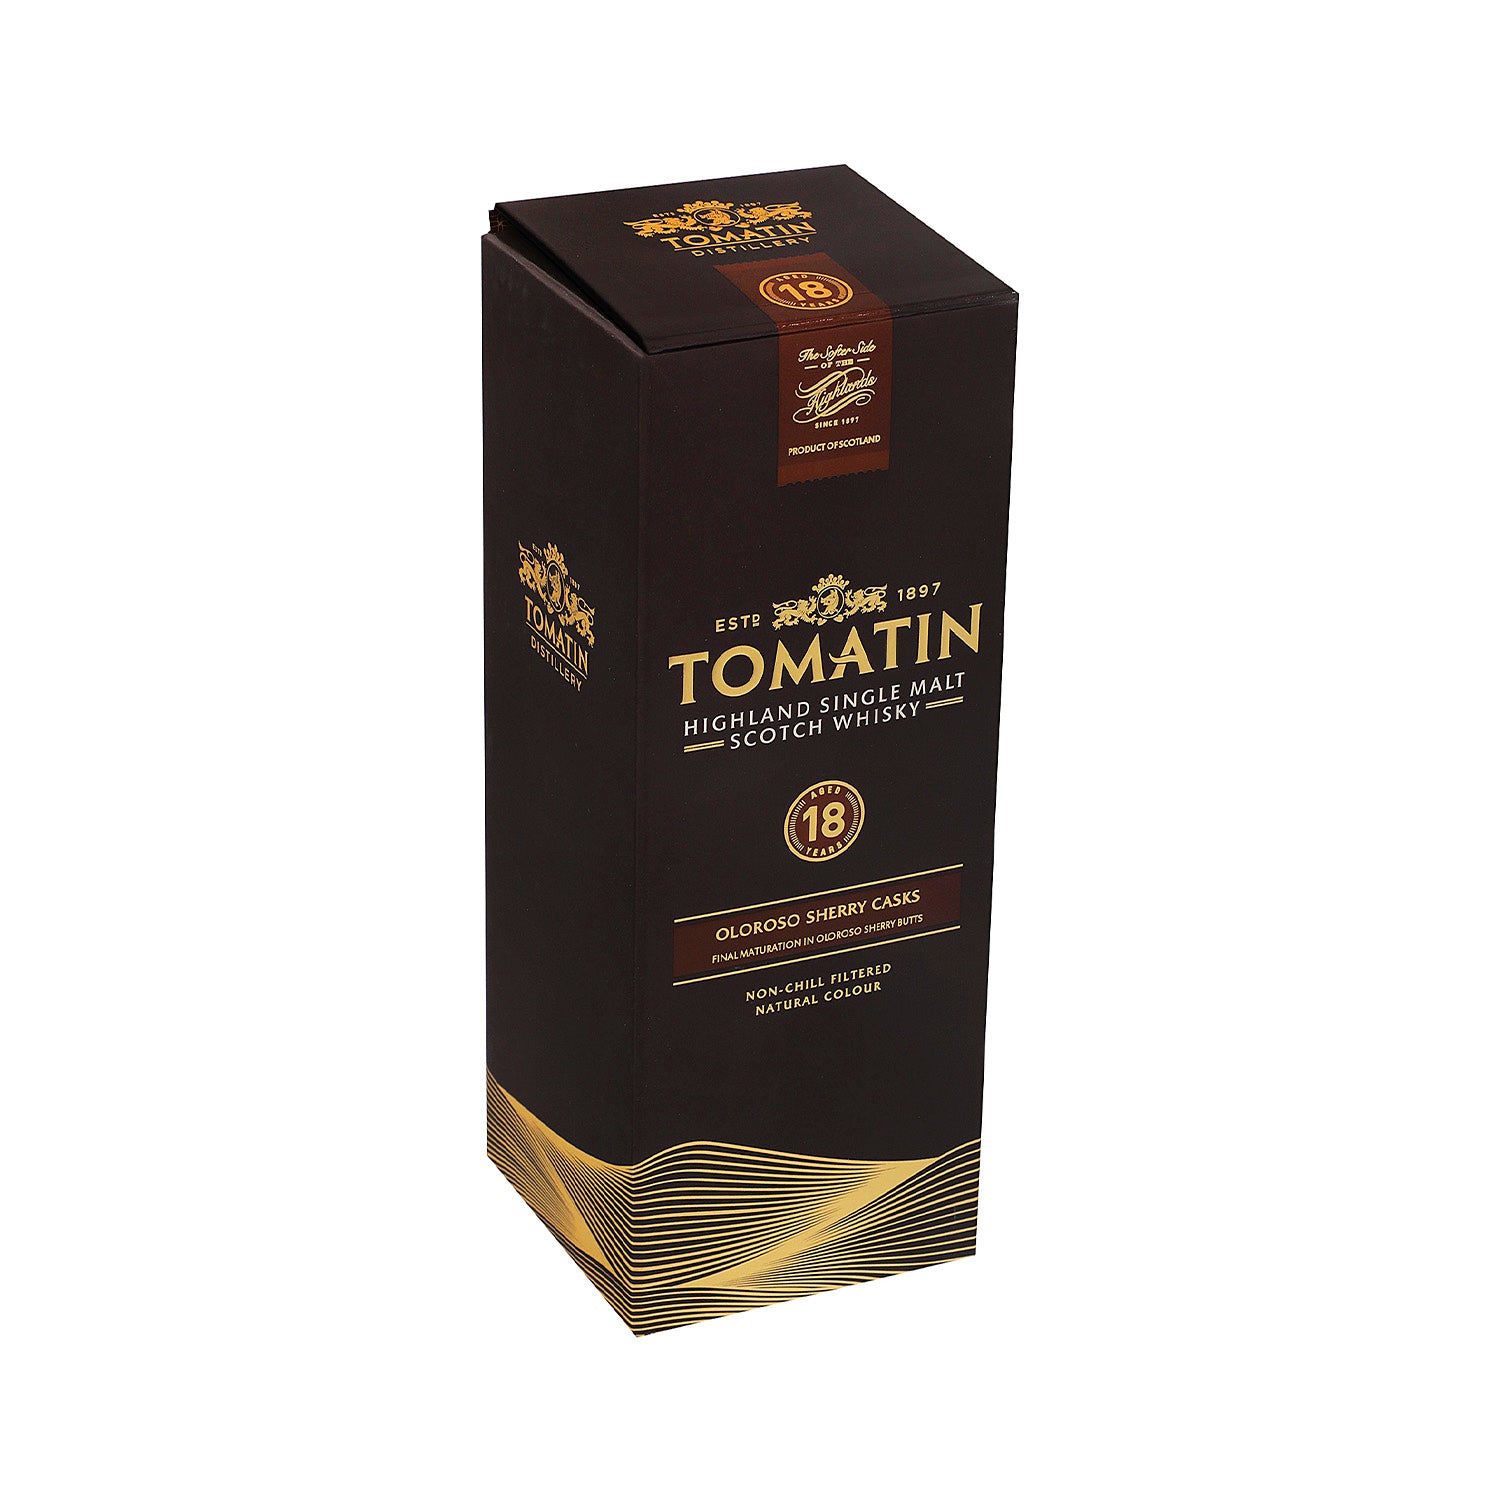 Whisky - Tomatin 18 años - 700 ml